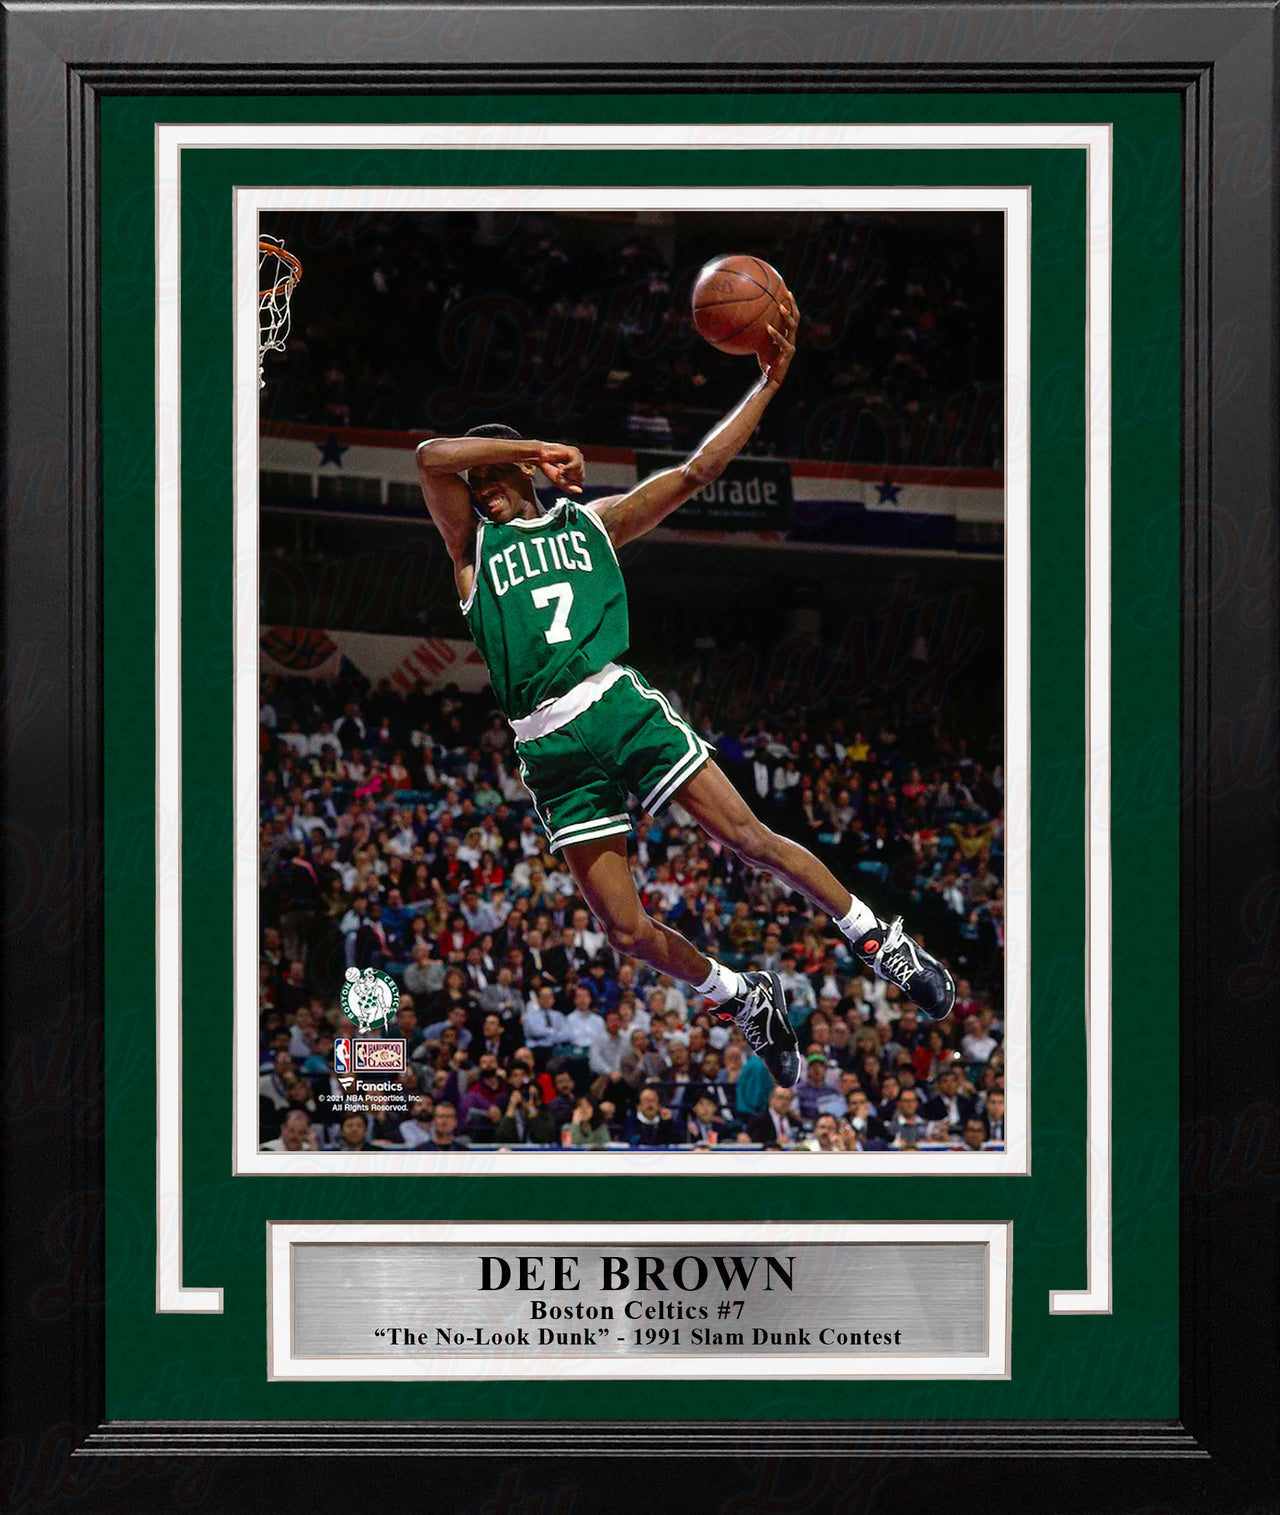 Dee Brown No-Look Dunk 1991 Slam Dunk Contest Boston Celtics 8" x 10" Framed Basketball Photo - Dynasty Sports & Framing 